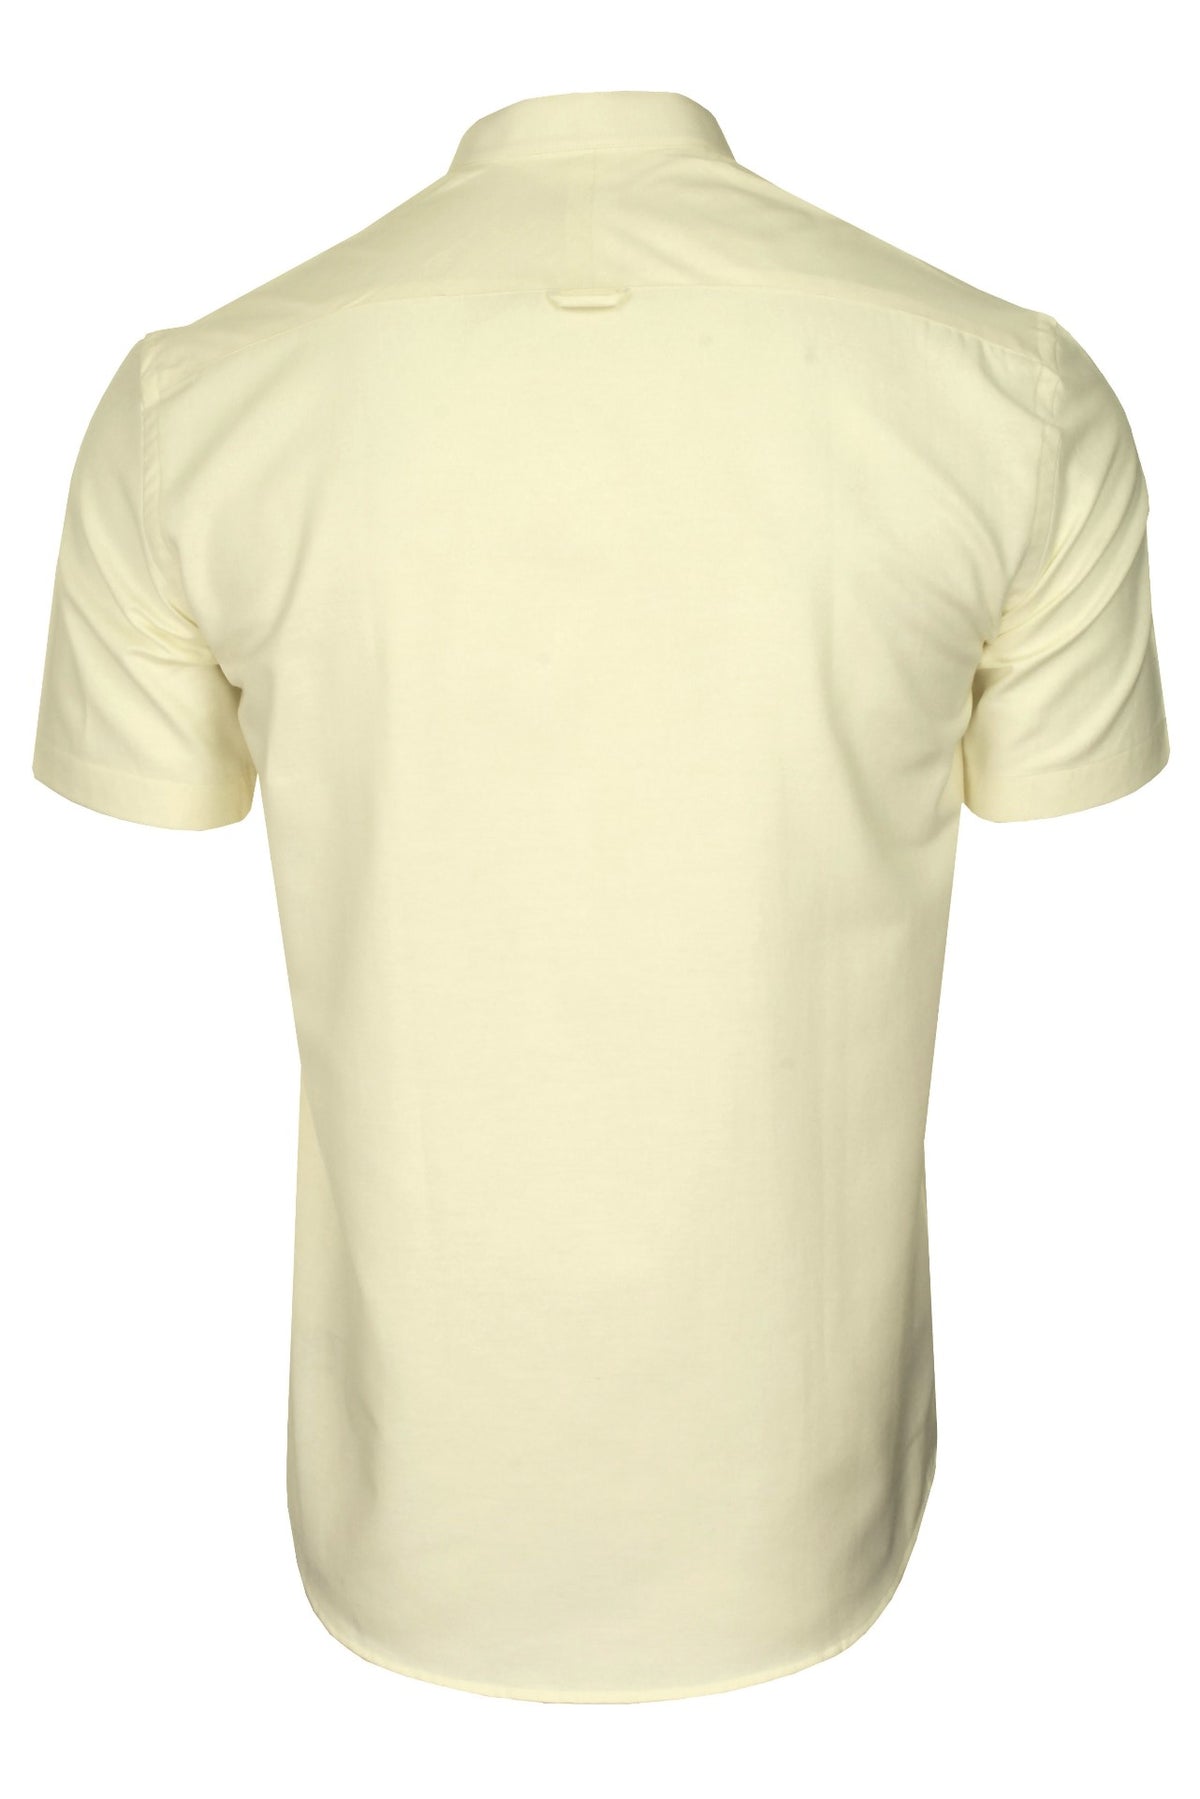 Xact Men's Grandad Collar Oxford Shirt Slim Fit Short Sleeved, 03, Xsh1022, Yellow